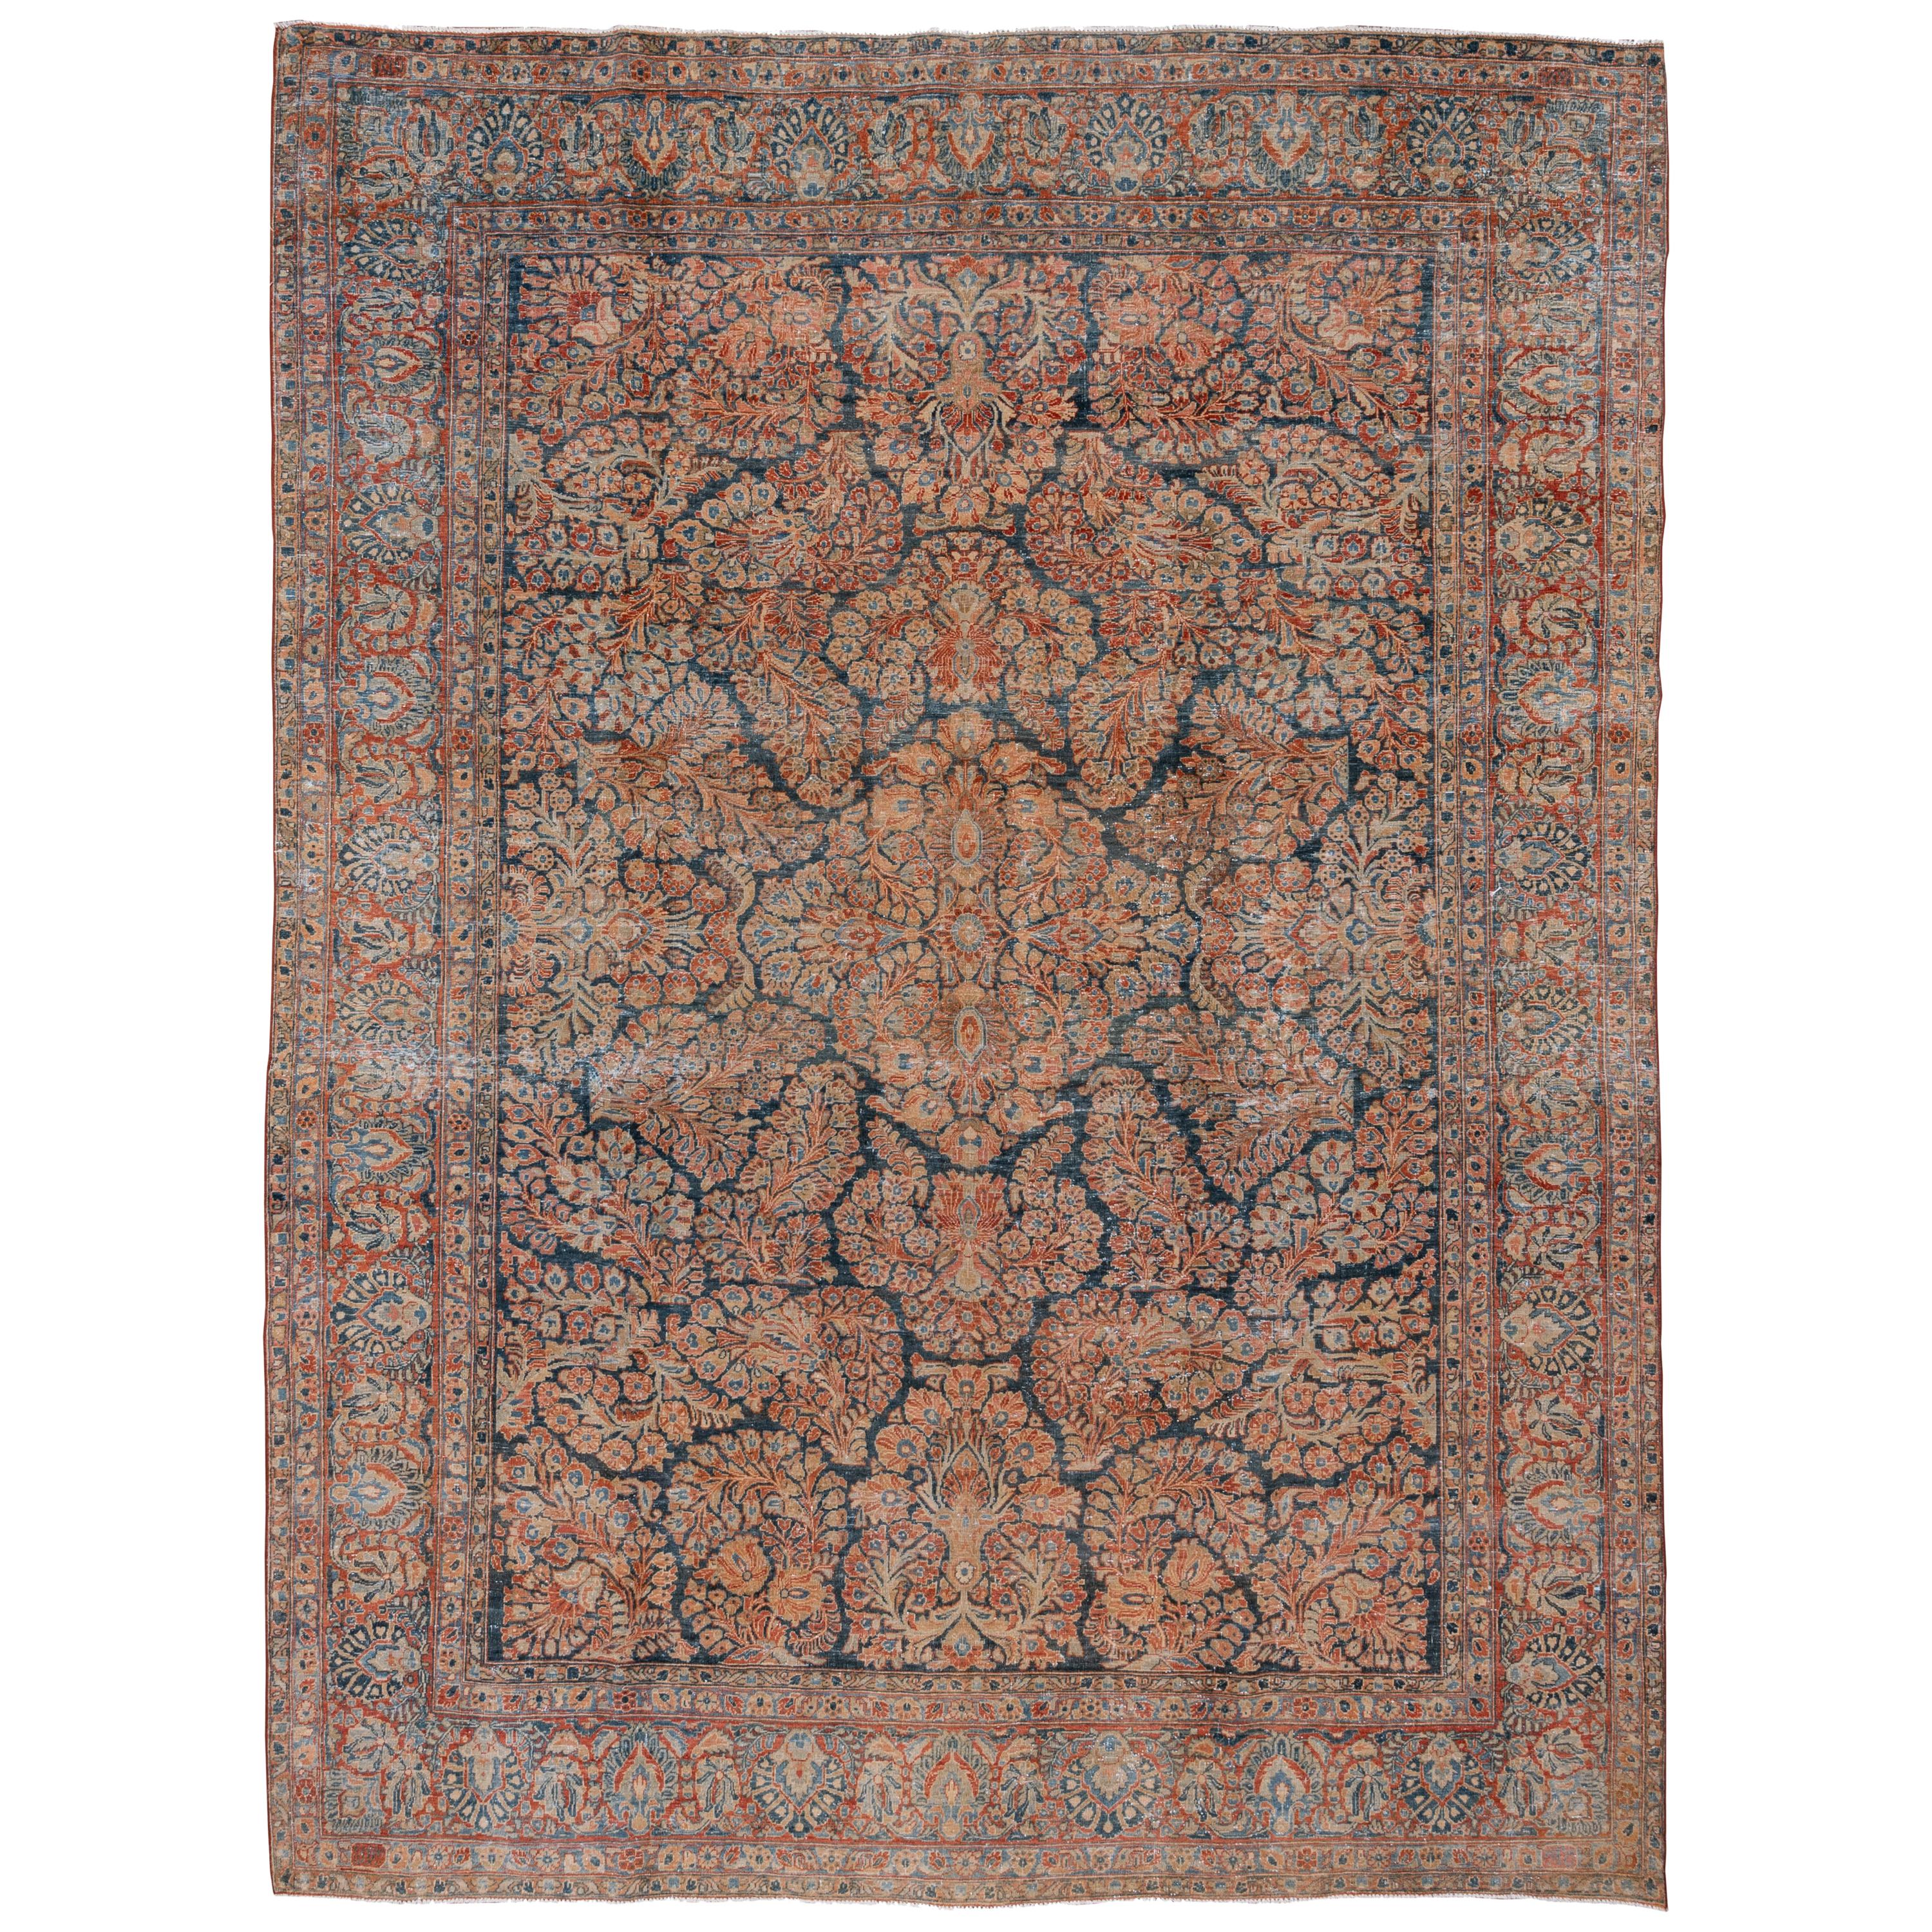 Antique Persian Sarouk Carpet, Allover Field, circa 1930s